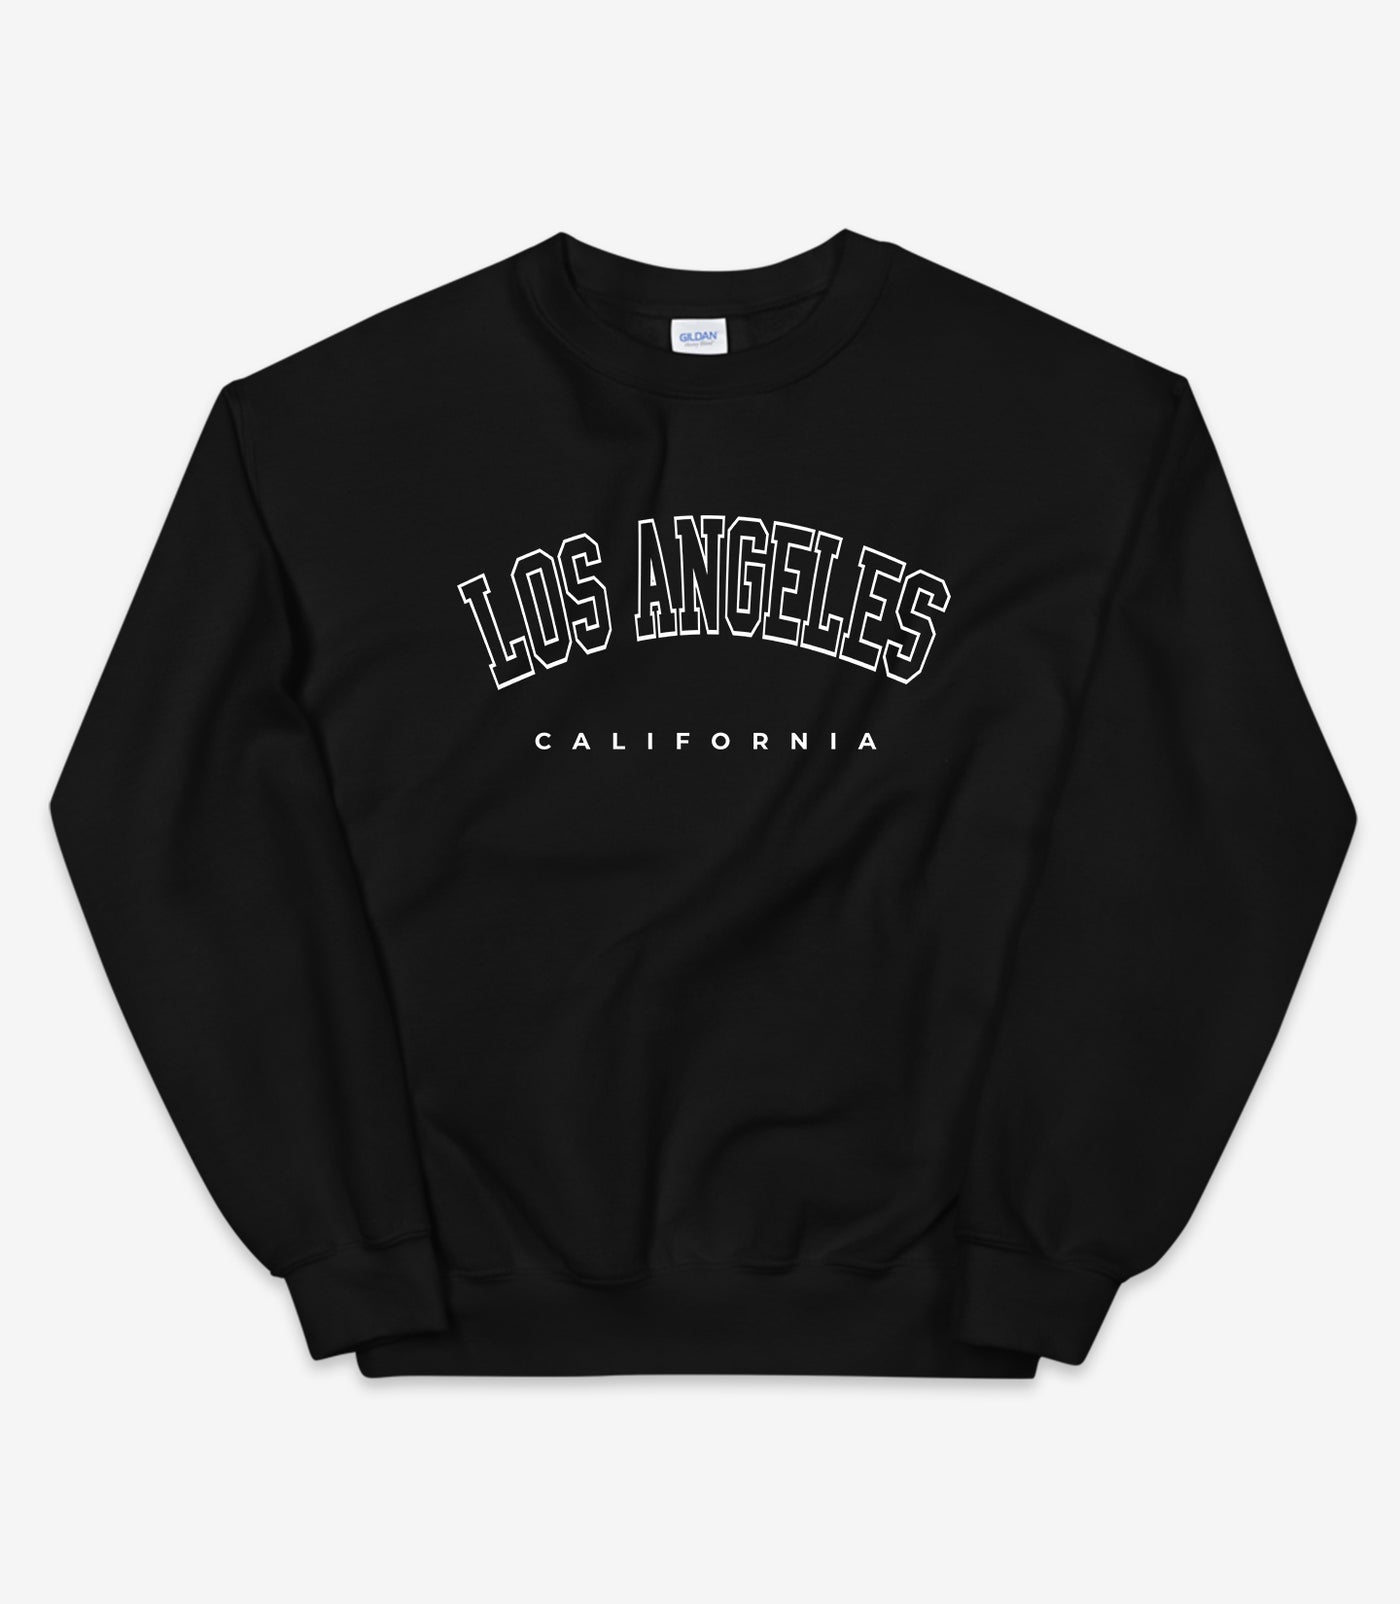 Los Angeles Sweater